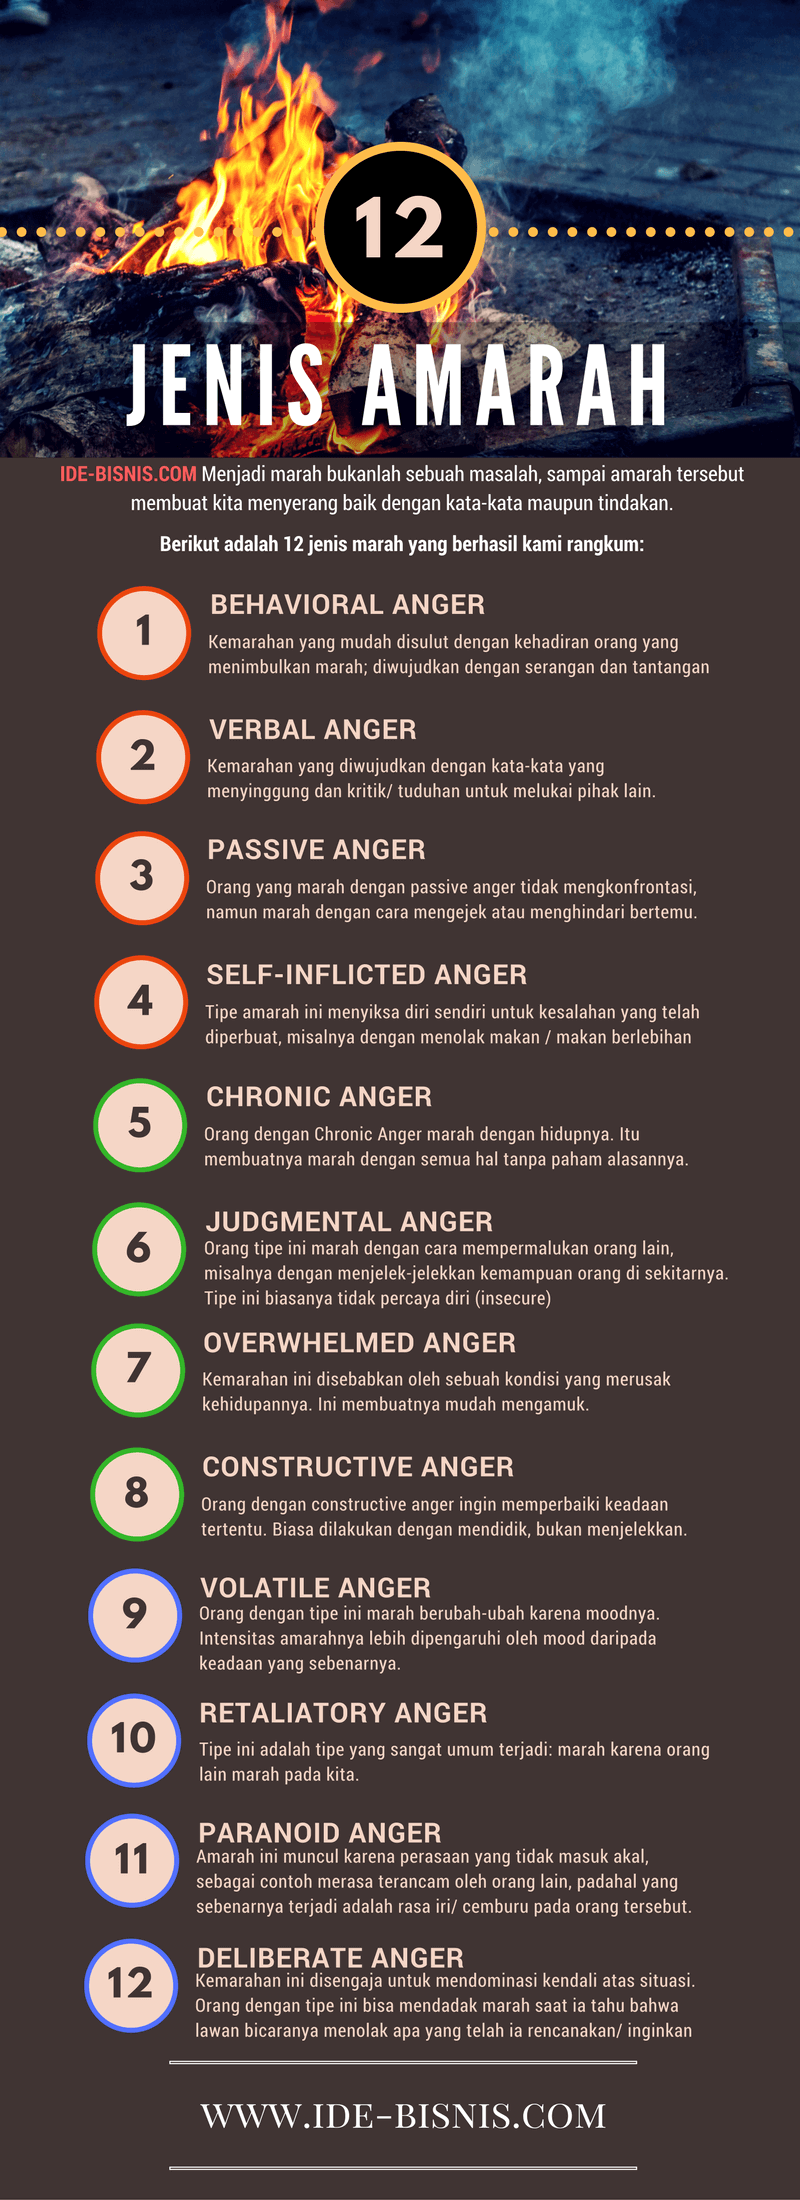 12 Jenis Kemarahan - Behavioral Anger, Verbal Anger, Passive Anger, Self-Inflicted Anger, Chronic Anger, Judgmental Anger, Overwhelmed Anger, Constructive Anger, Volatile Anger, Retaliatory Anger, Paranoid Anger, Deliberate Anger